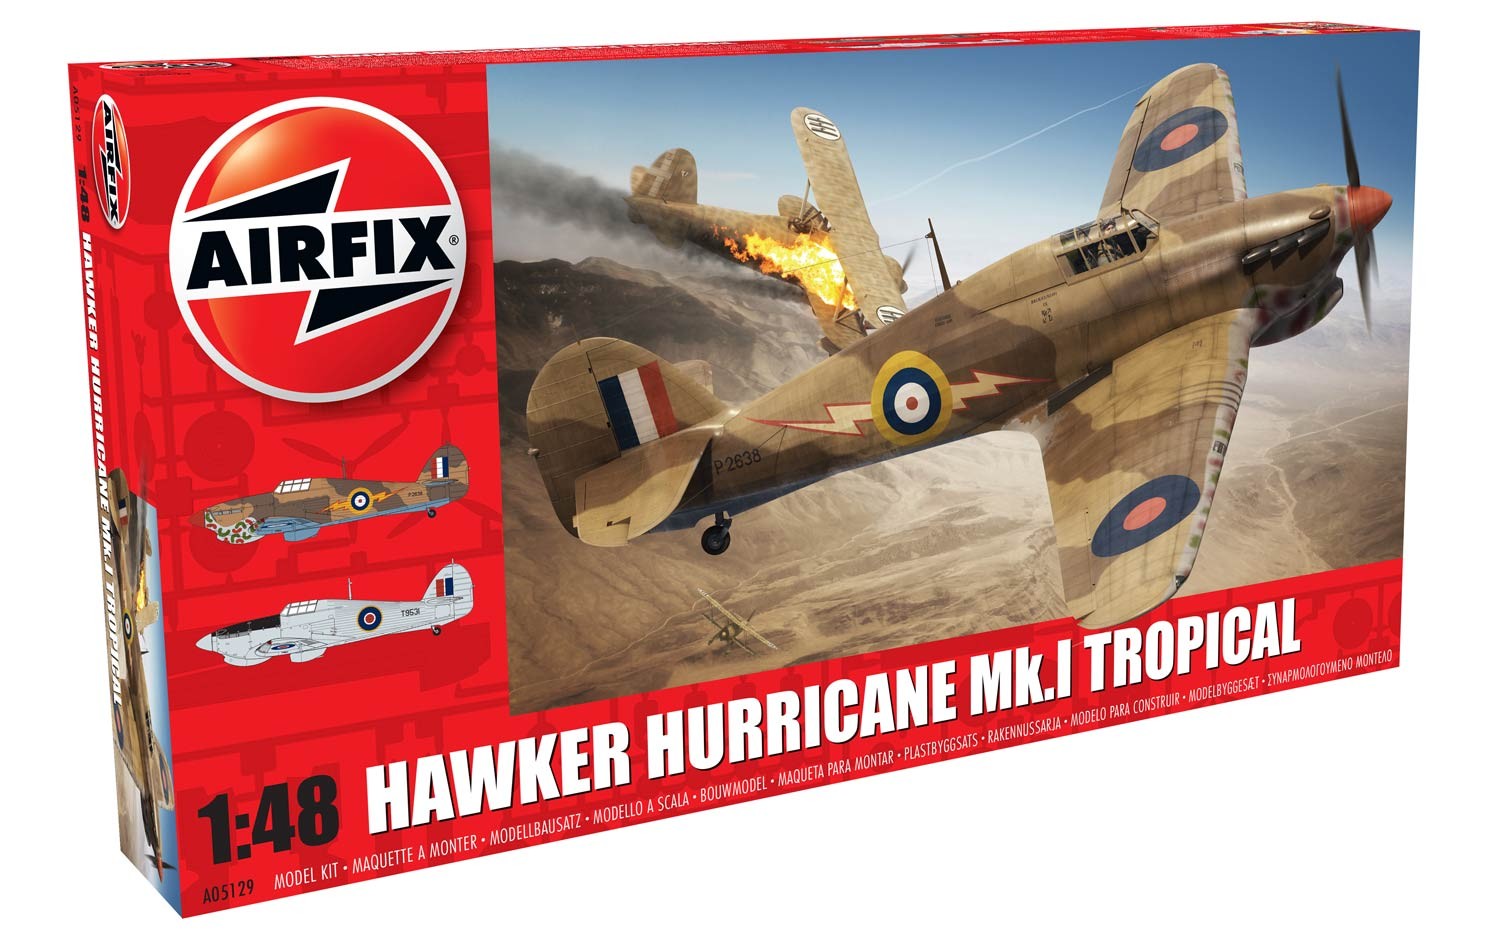 Airfix Hawker Hurricane Mk1 - Tropical in 1:48 bouwpakket